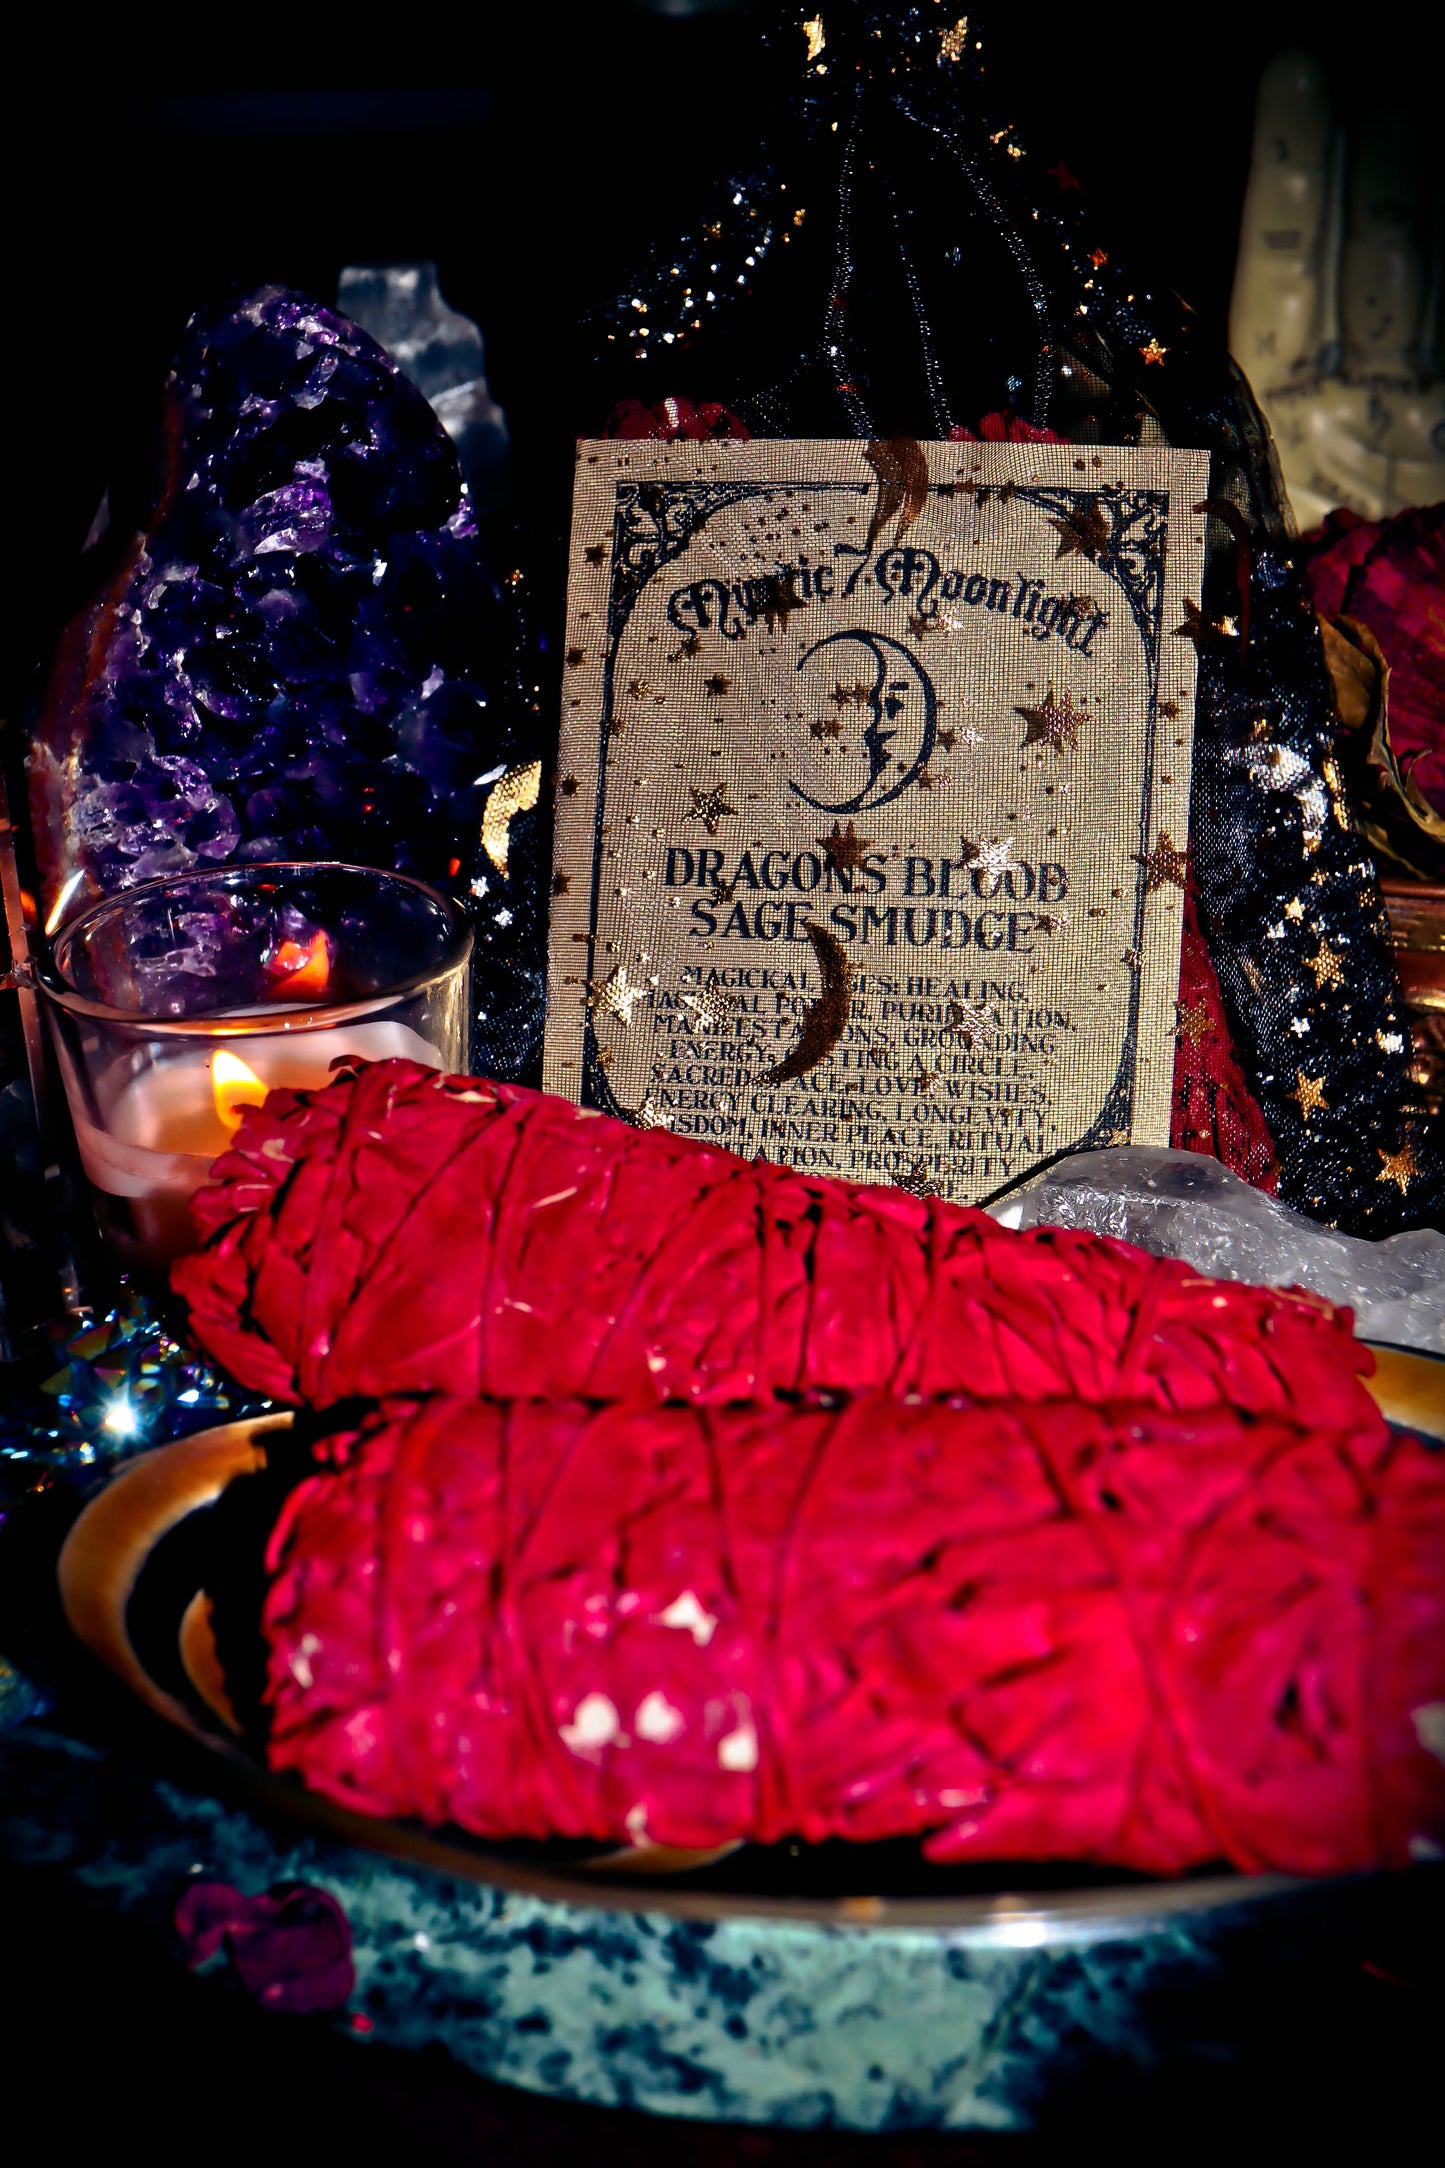 DRAGON'S BLOOD SAGE SMUDGE Attract Positive Energy, Banish Bad Karma, & Manifestation, Spirit Offering ~ Pack of 2